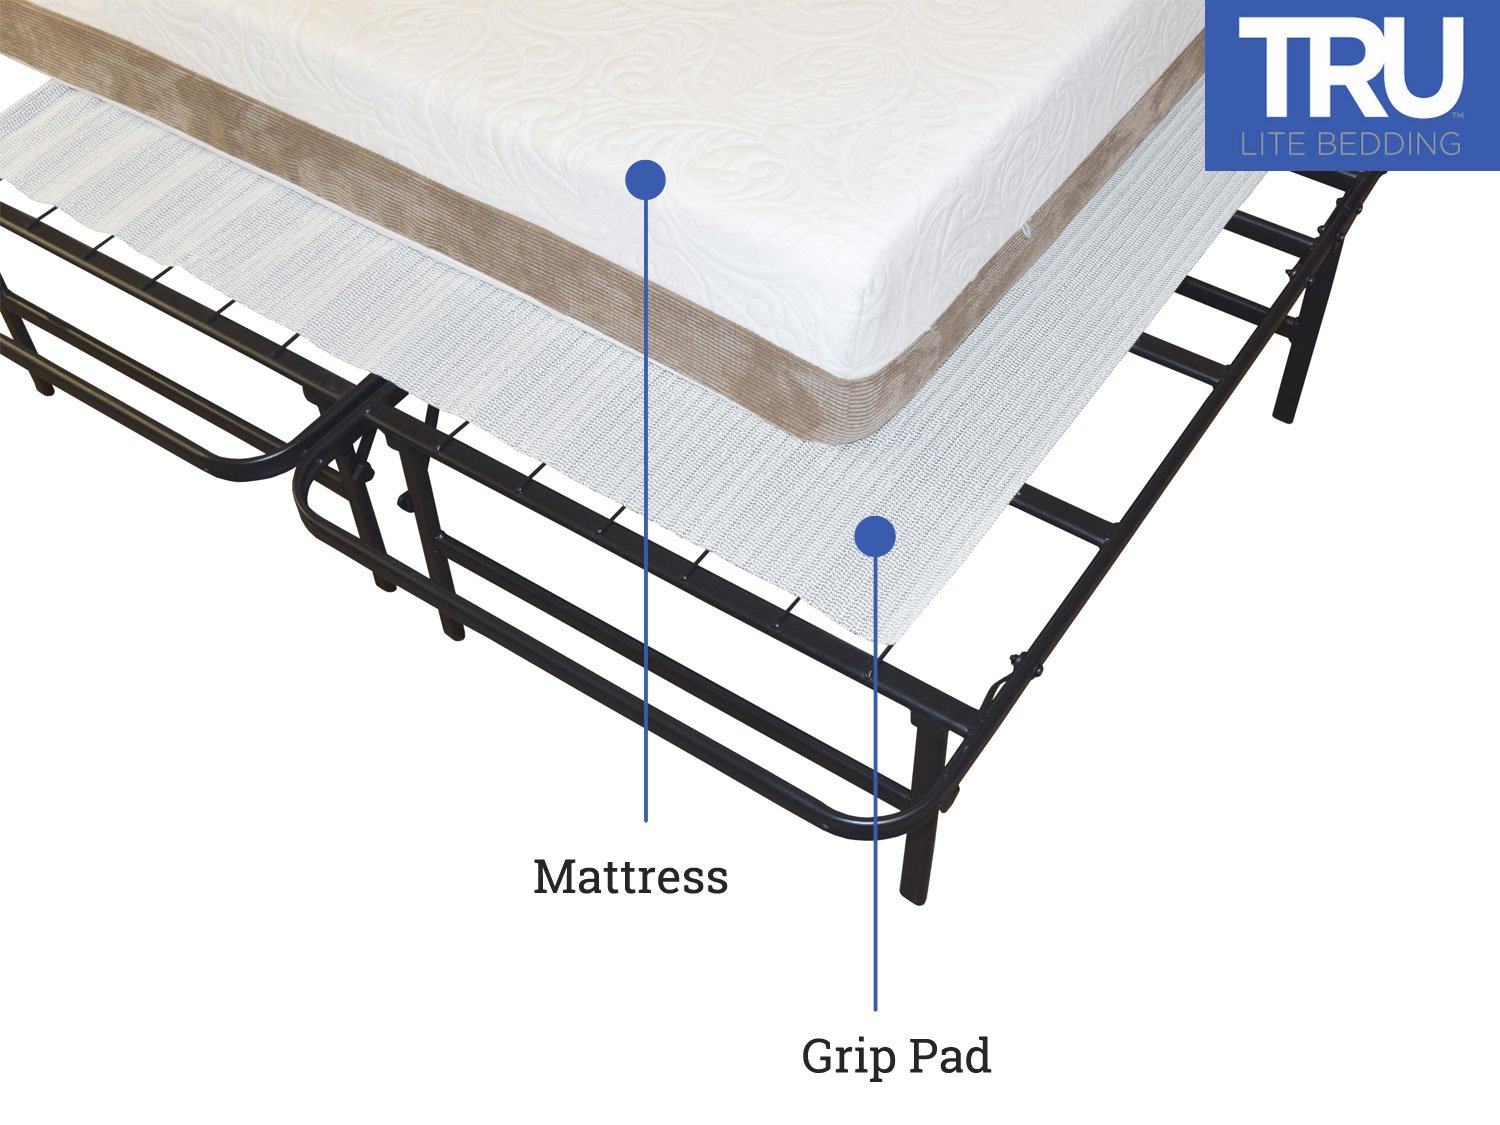 Tru Lite Bedding Non Slip Mattress or Rug Grip Pad - Twin, White